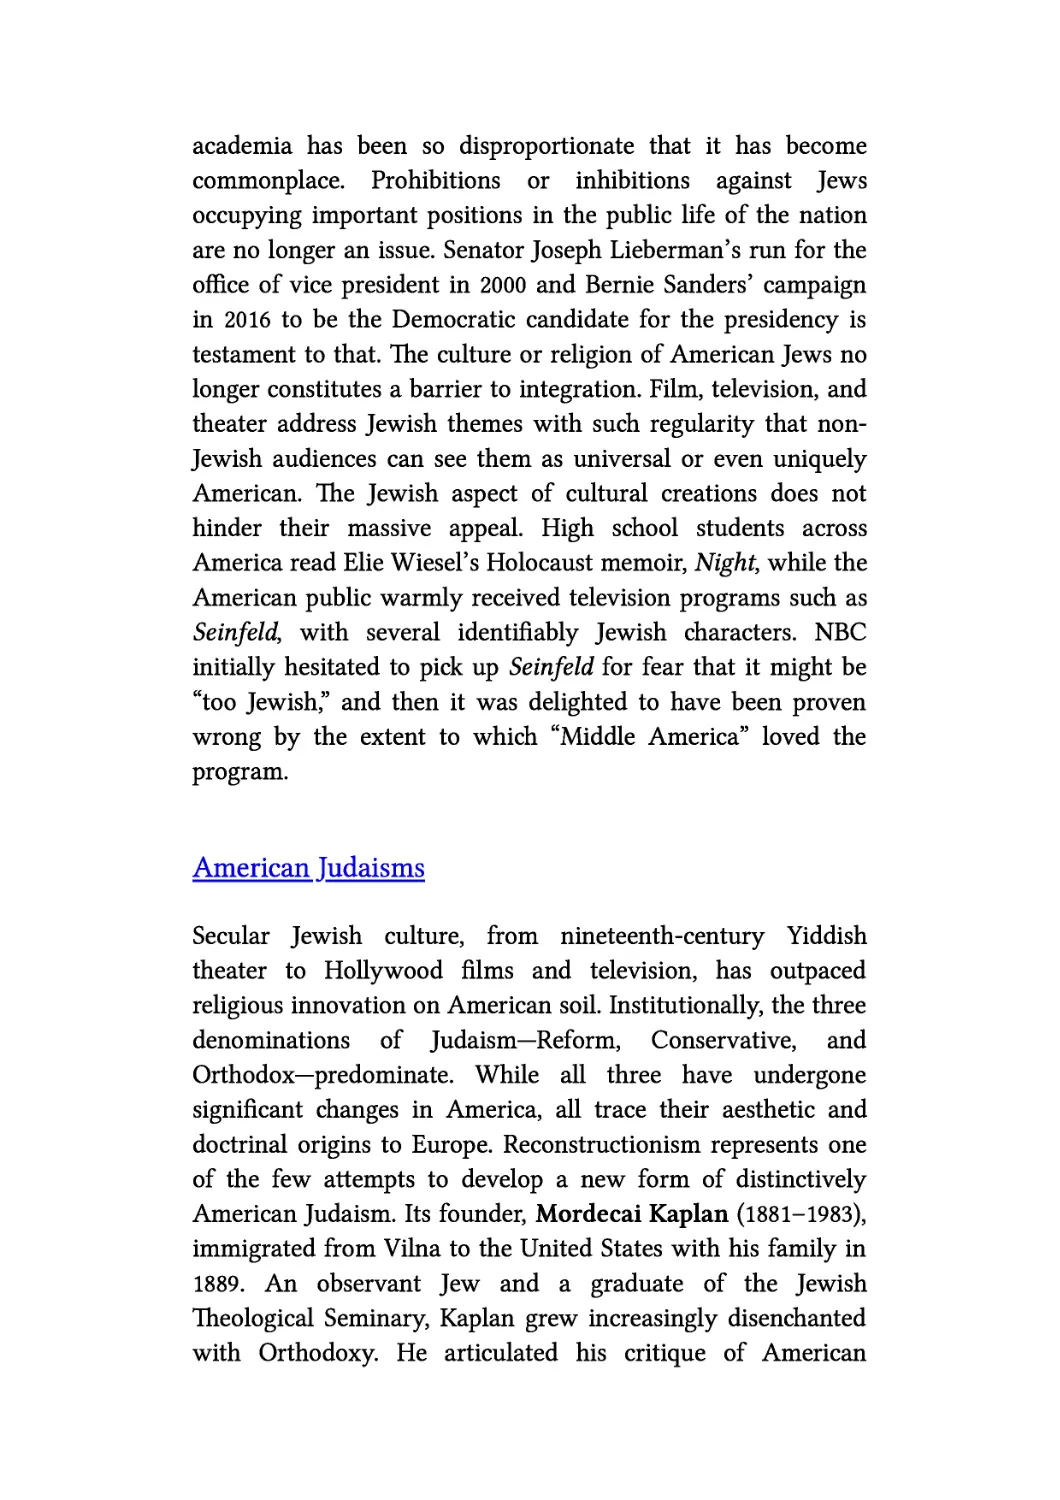 American Judaisms